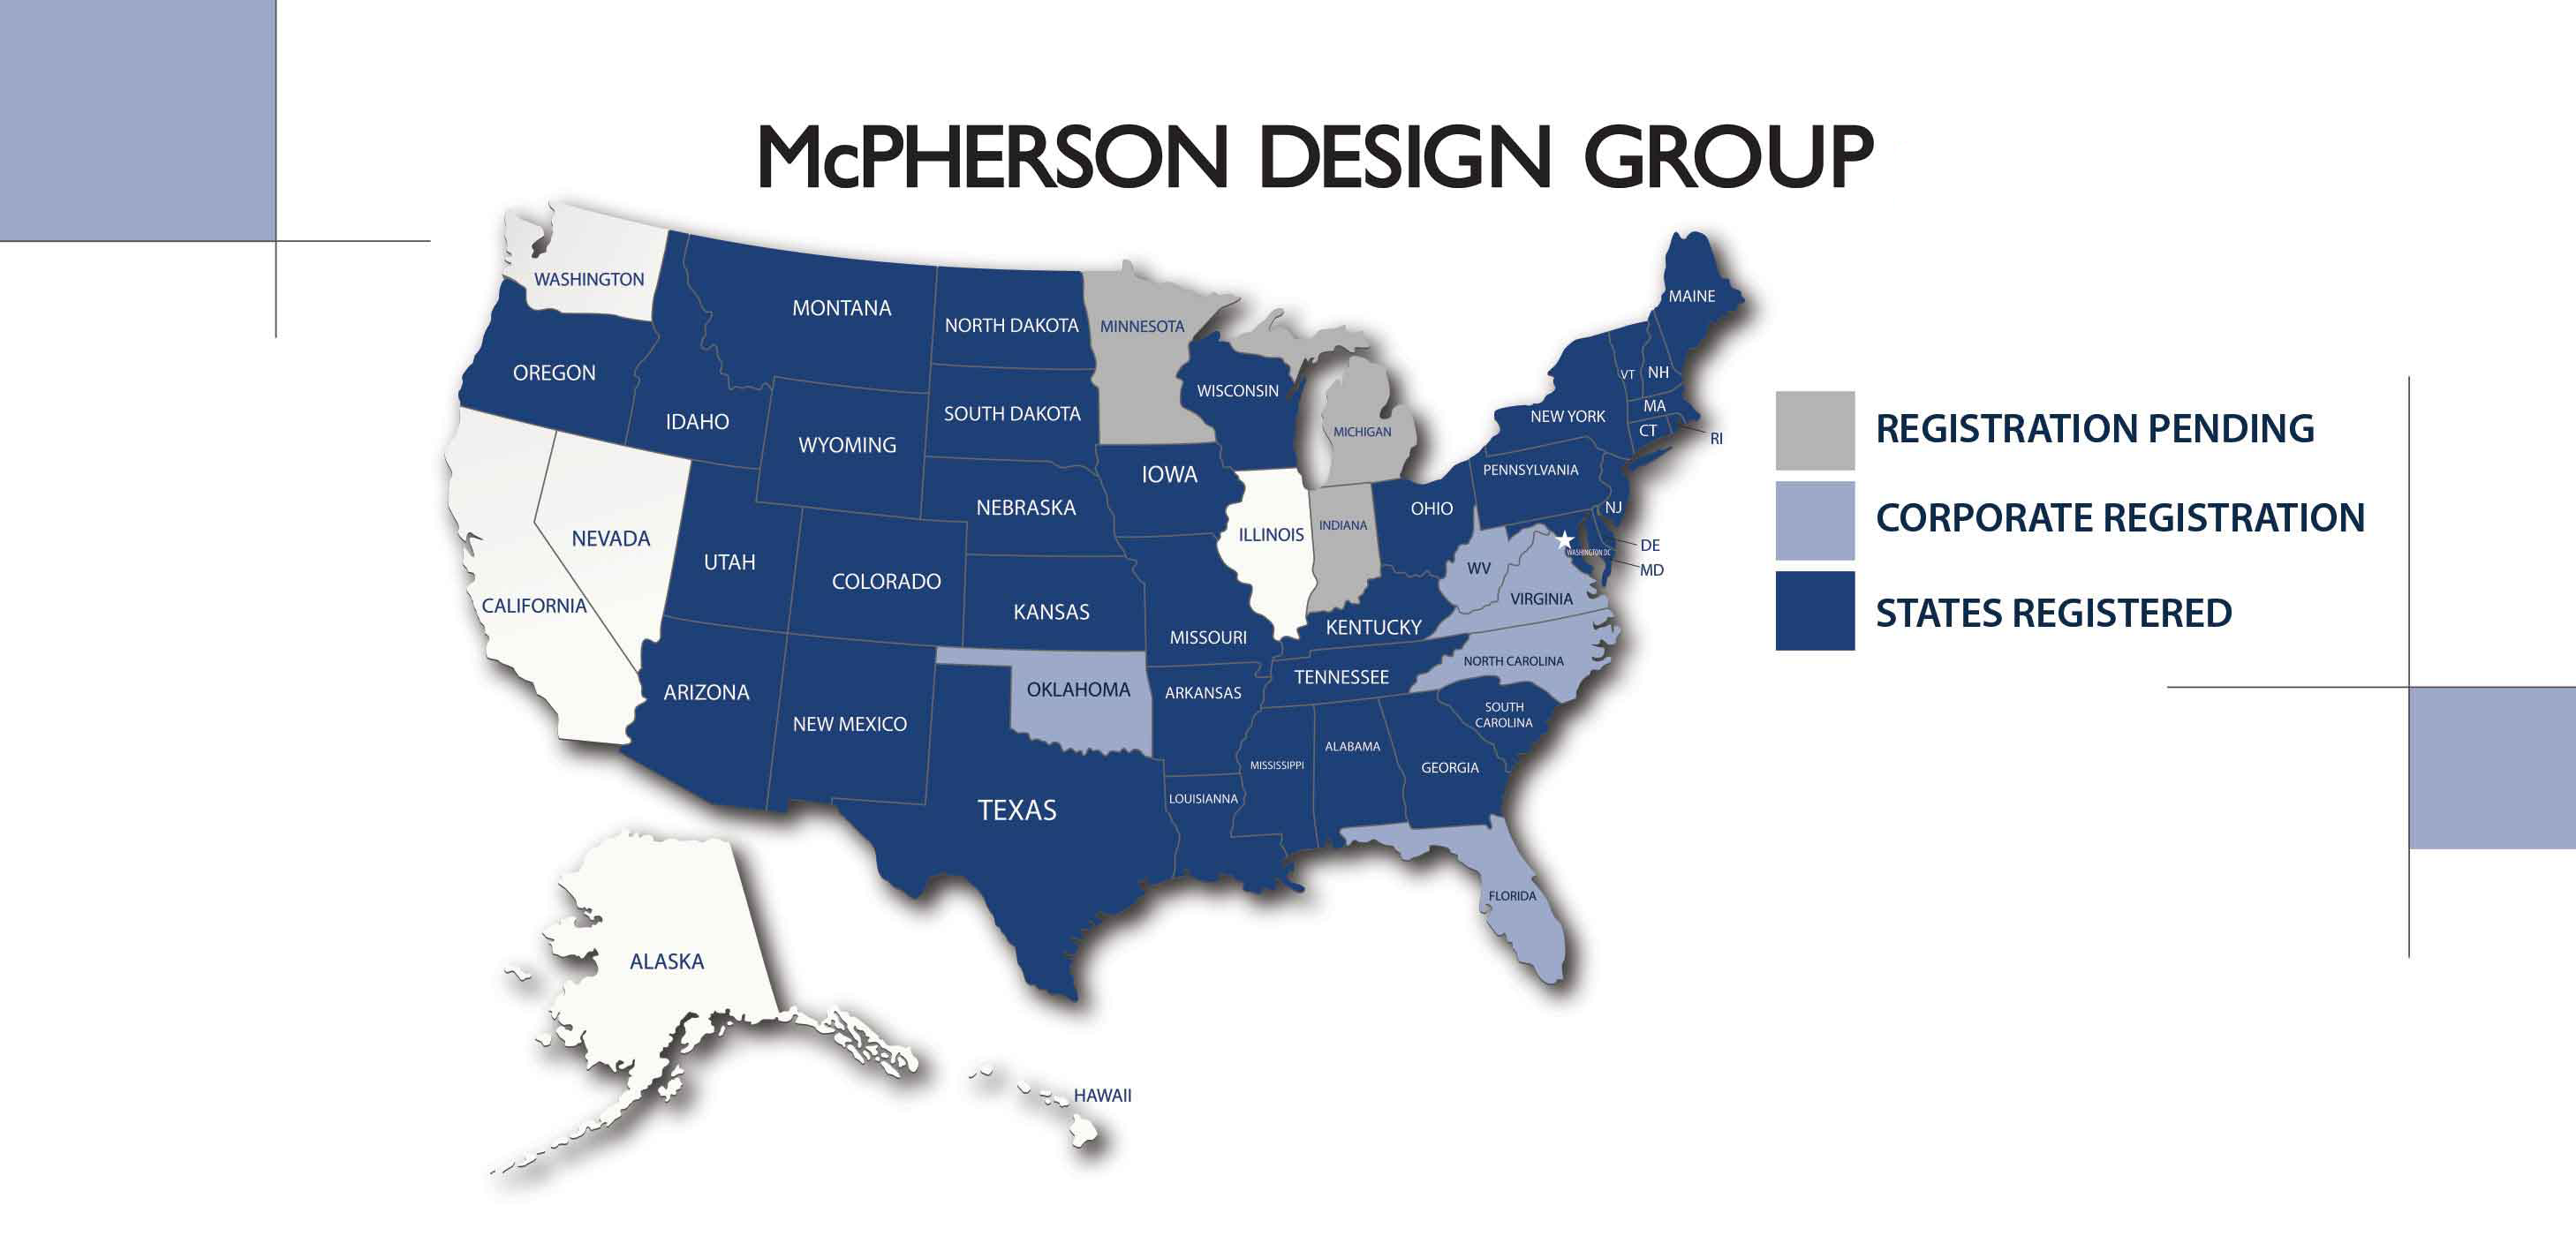 McPherson Design Group licensed states